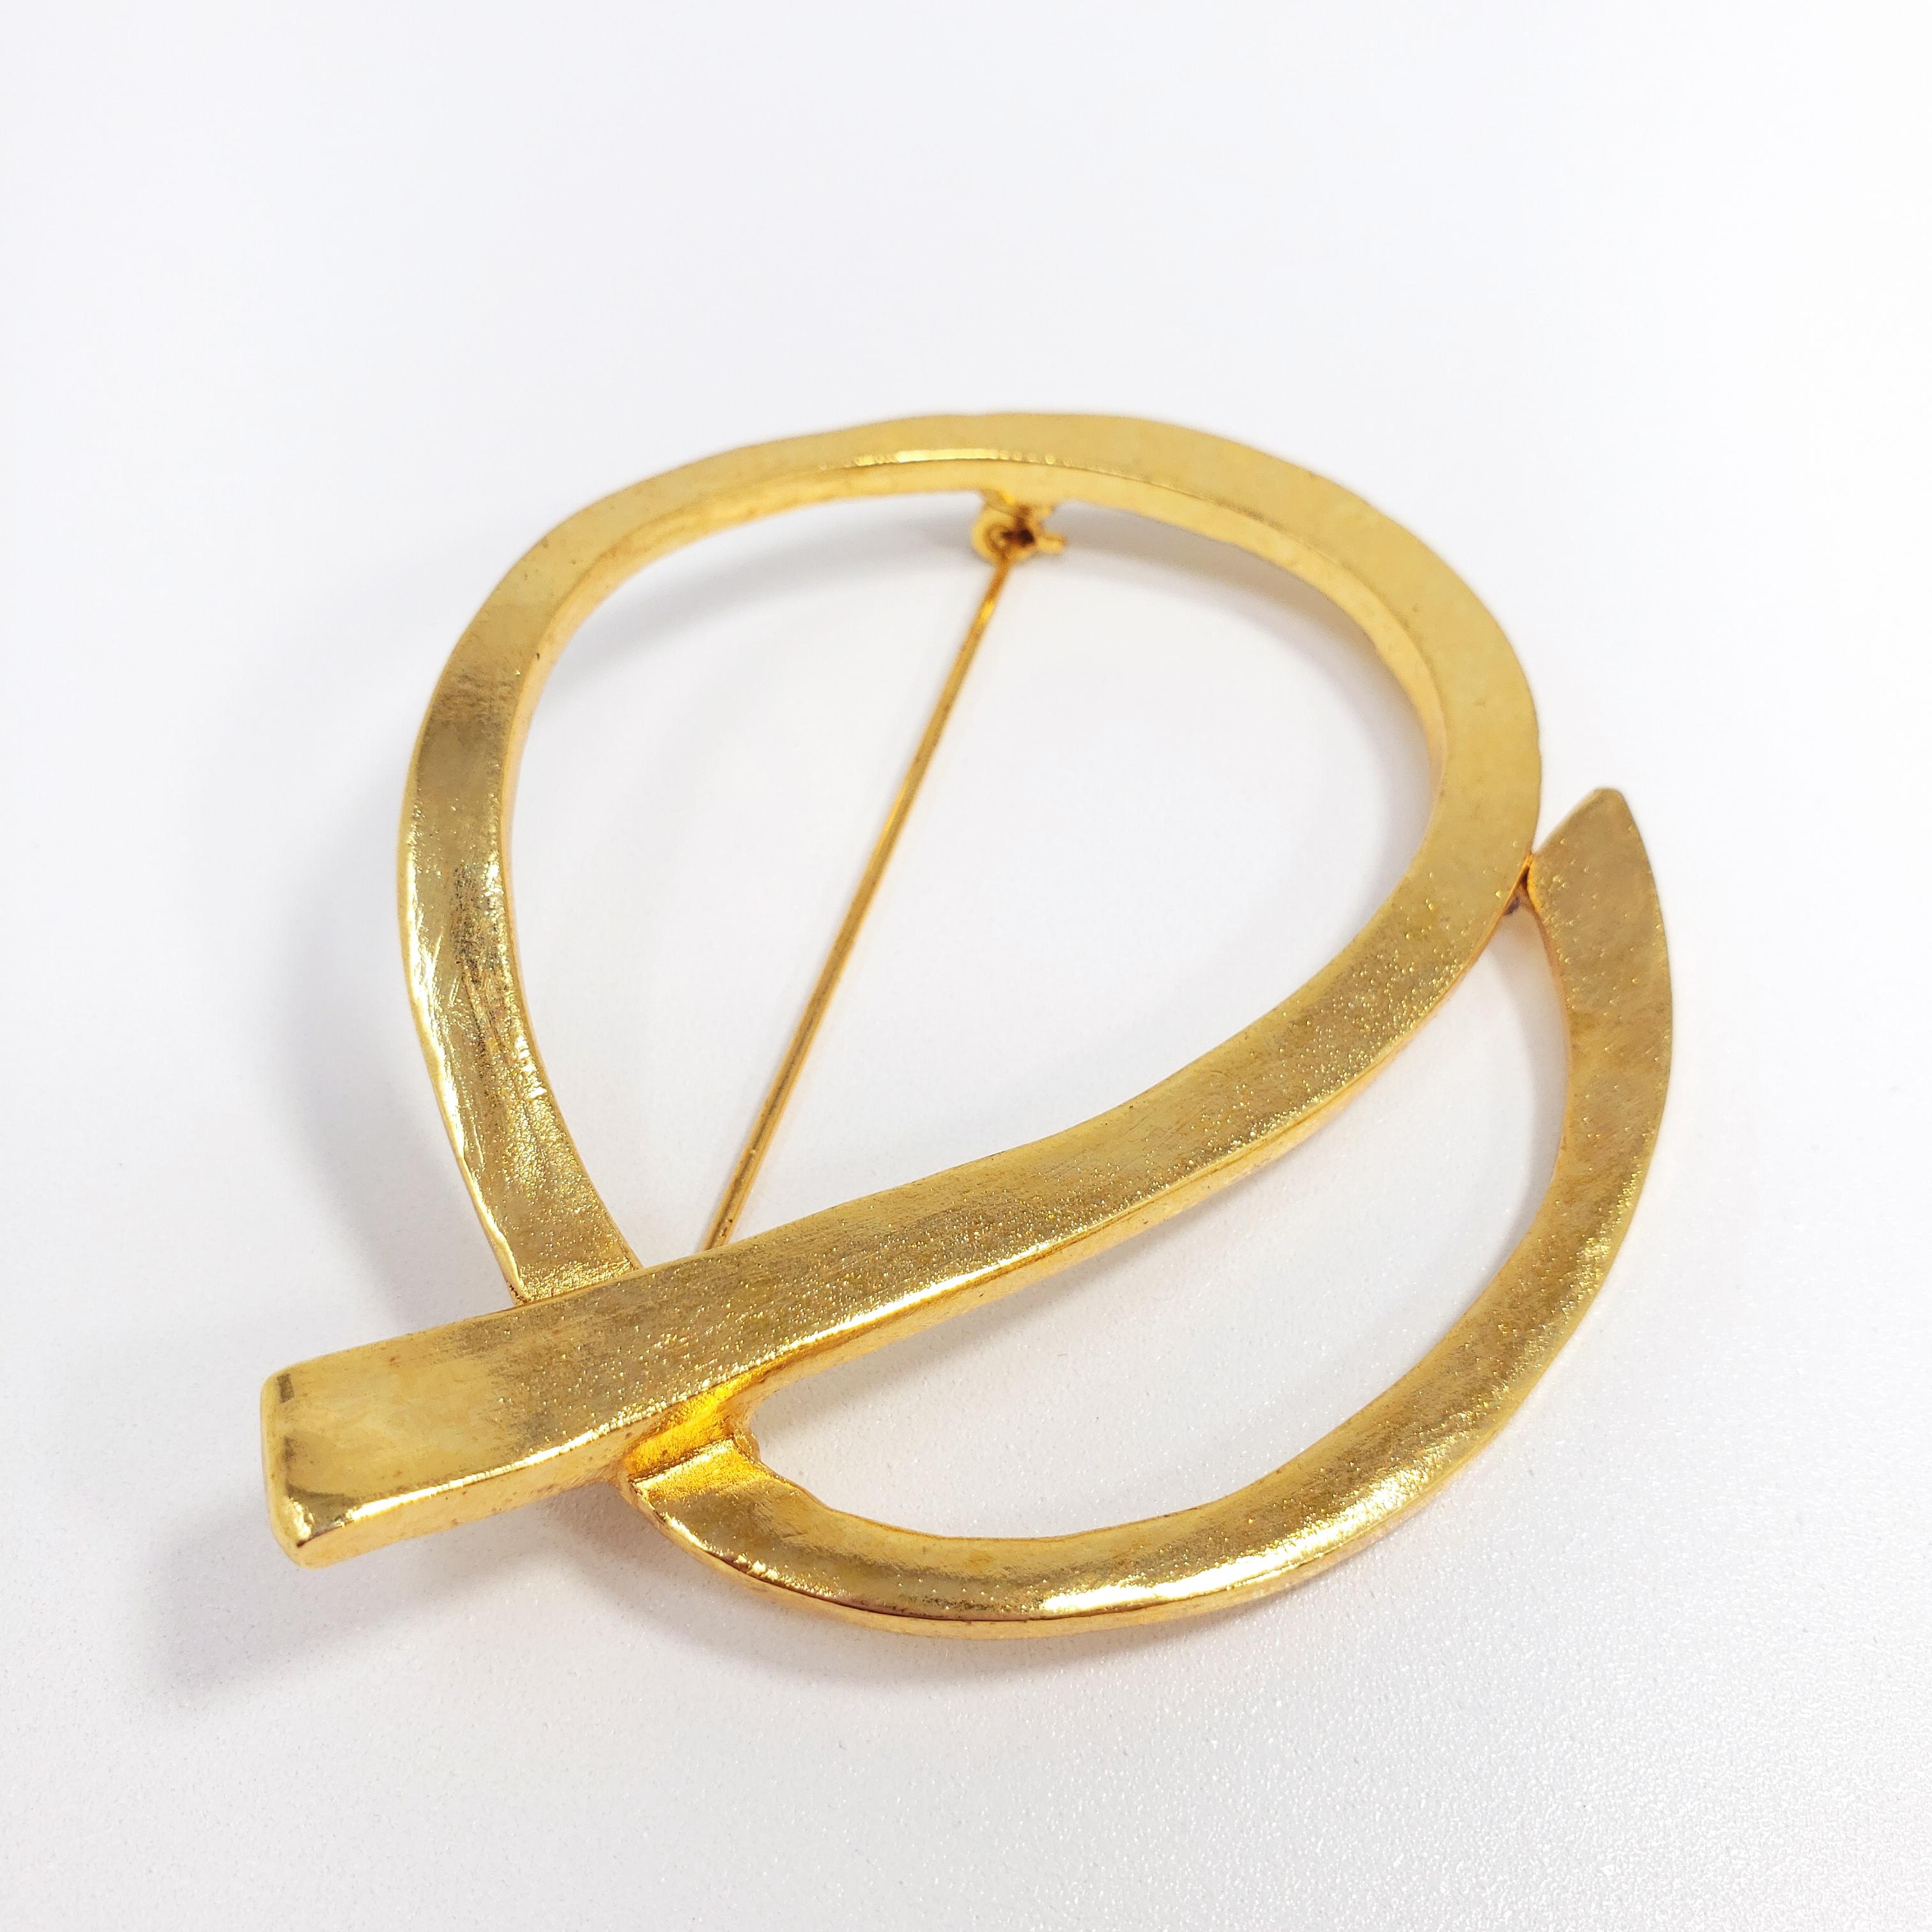 An abstract circular ribbon brooch/pin by Oscar de la Renta. Smooth gold finish.

Hallmarks: Oscar de la Renta, Made in USA